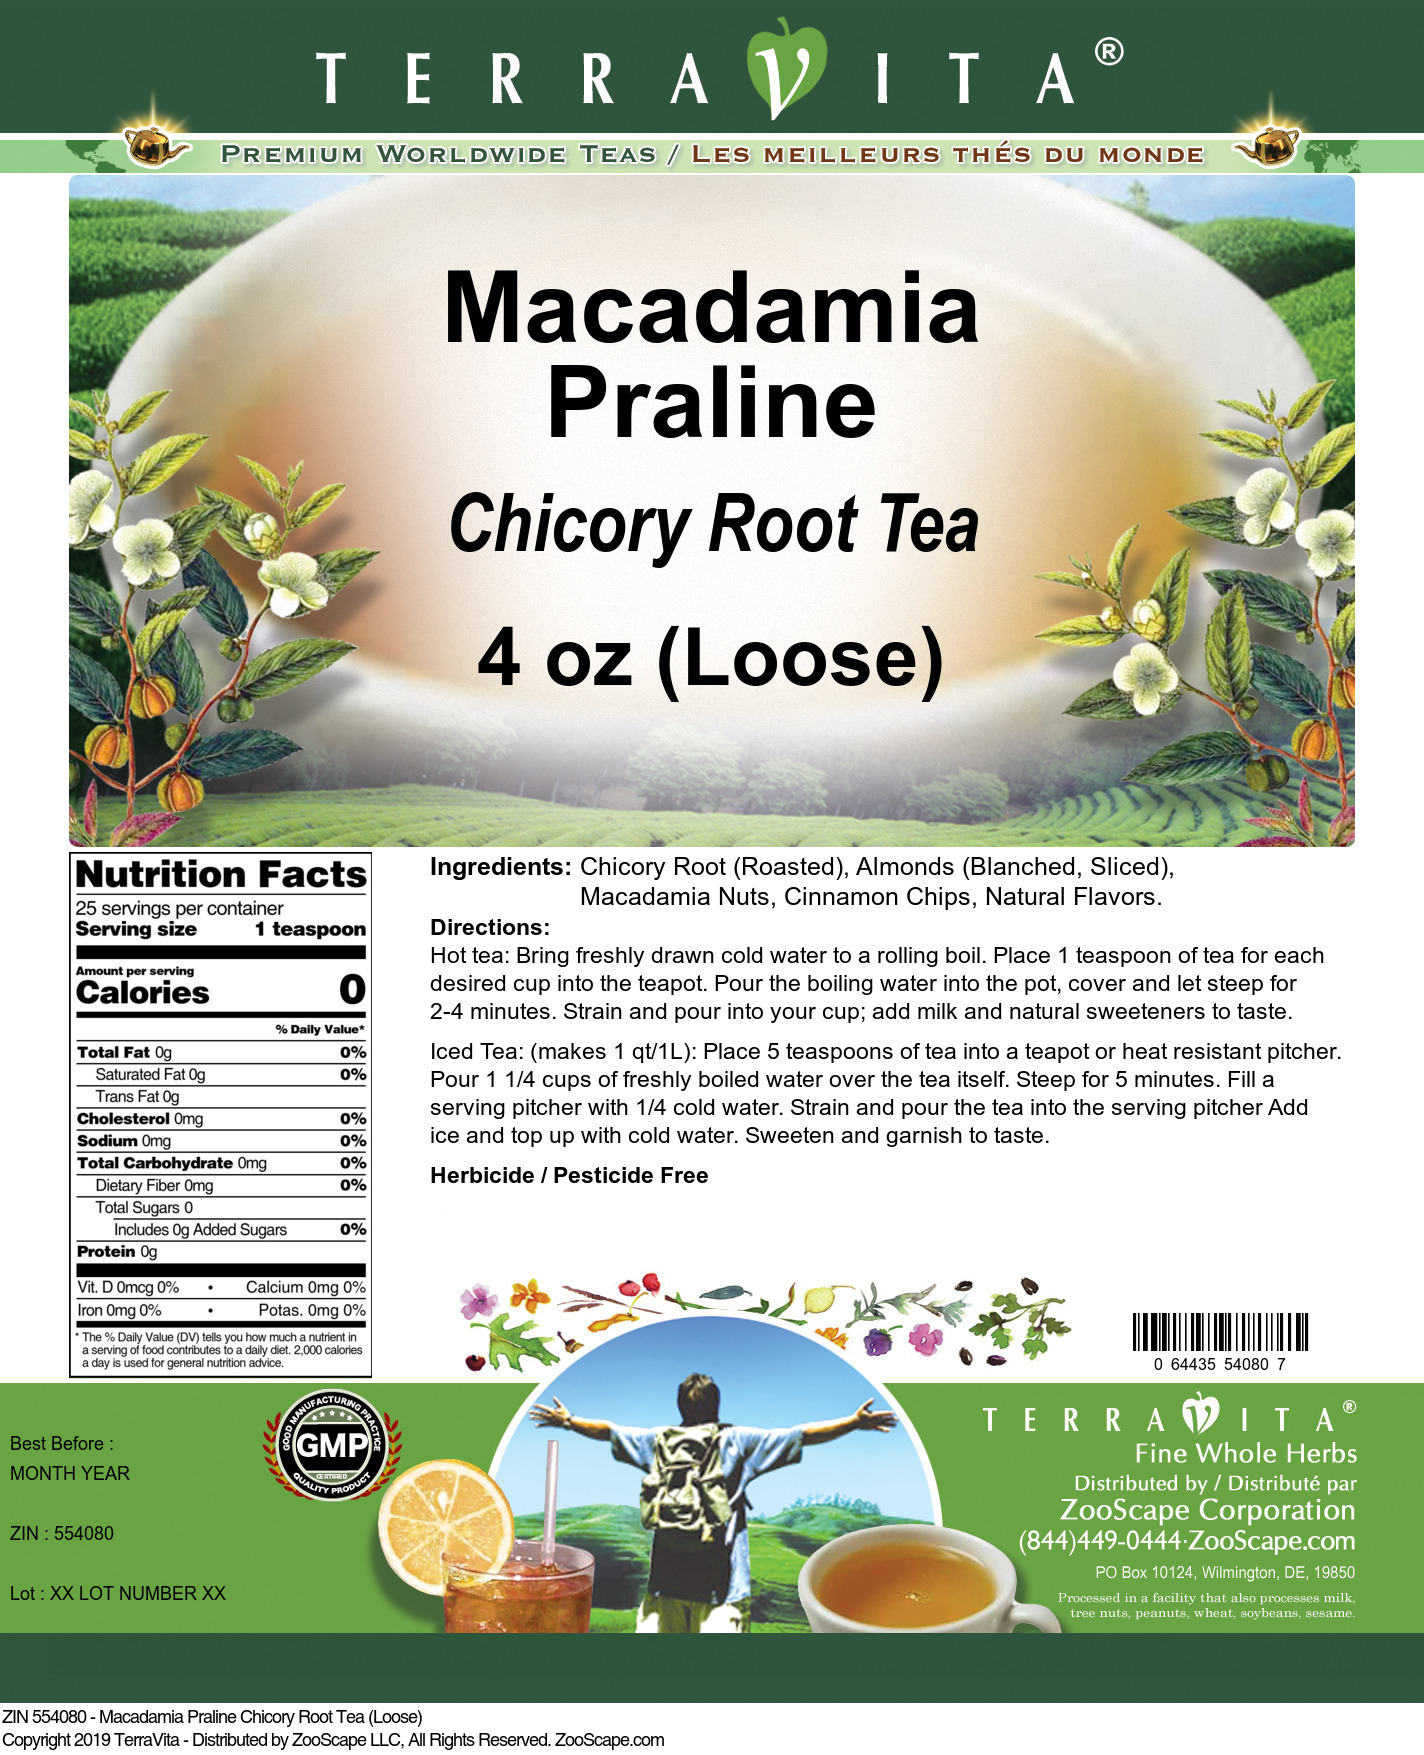 Macadamia Praline Chicory Root Tea (Loose) - Label